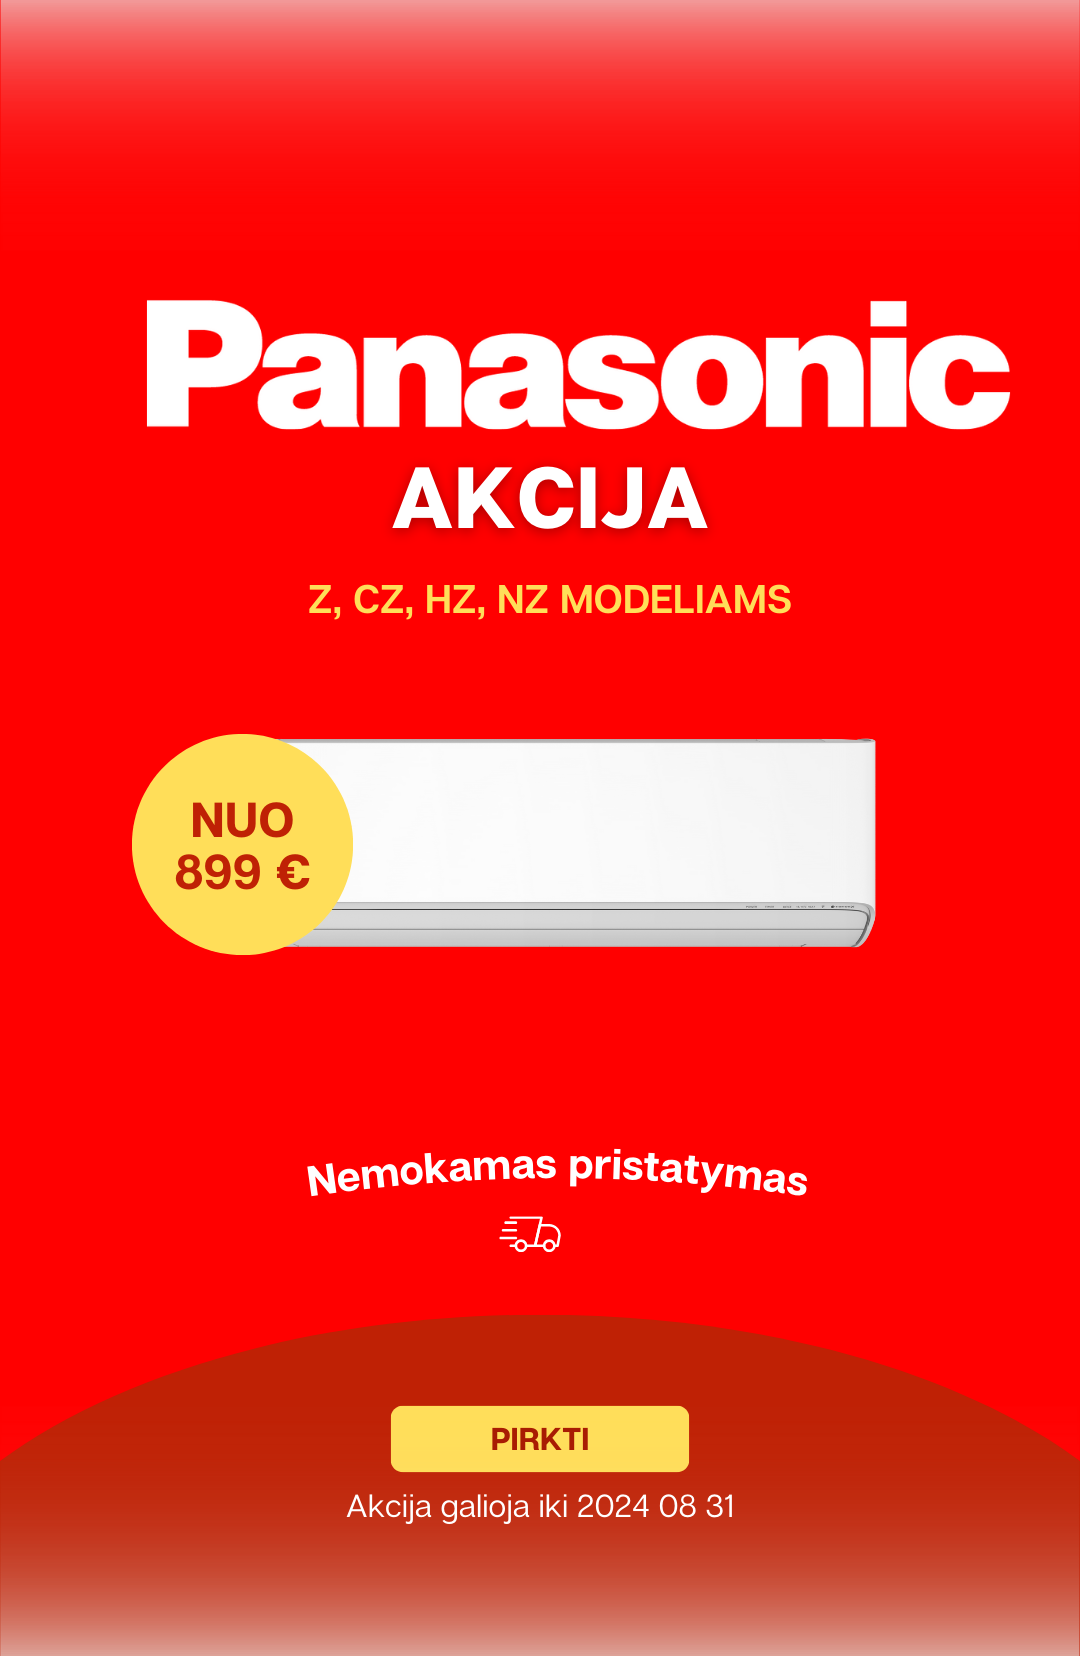 Panasonic promo